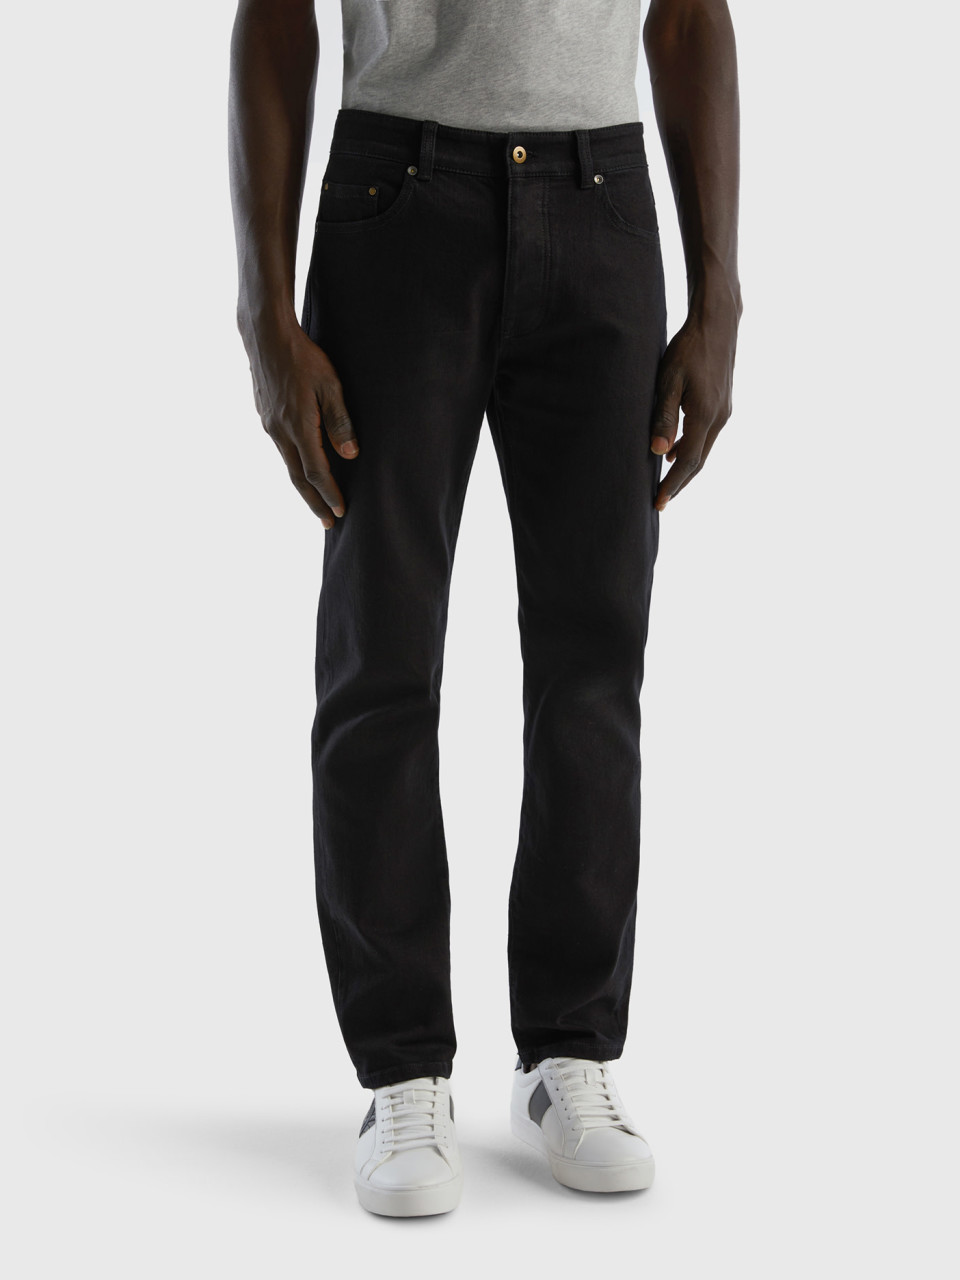 Benetton, Five Pocket Slim Fit Jeans, Black, Men